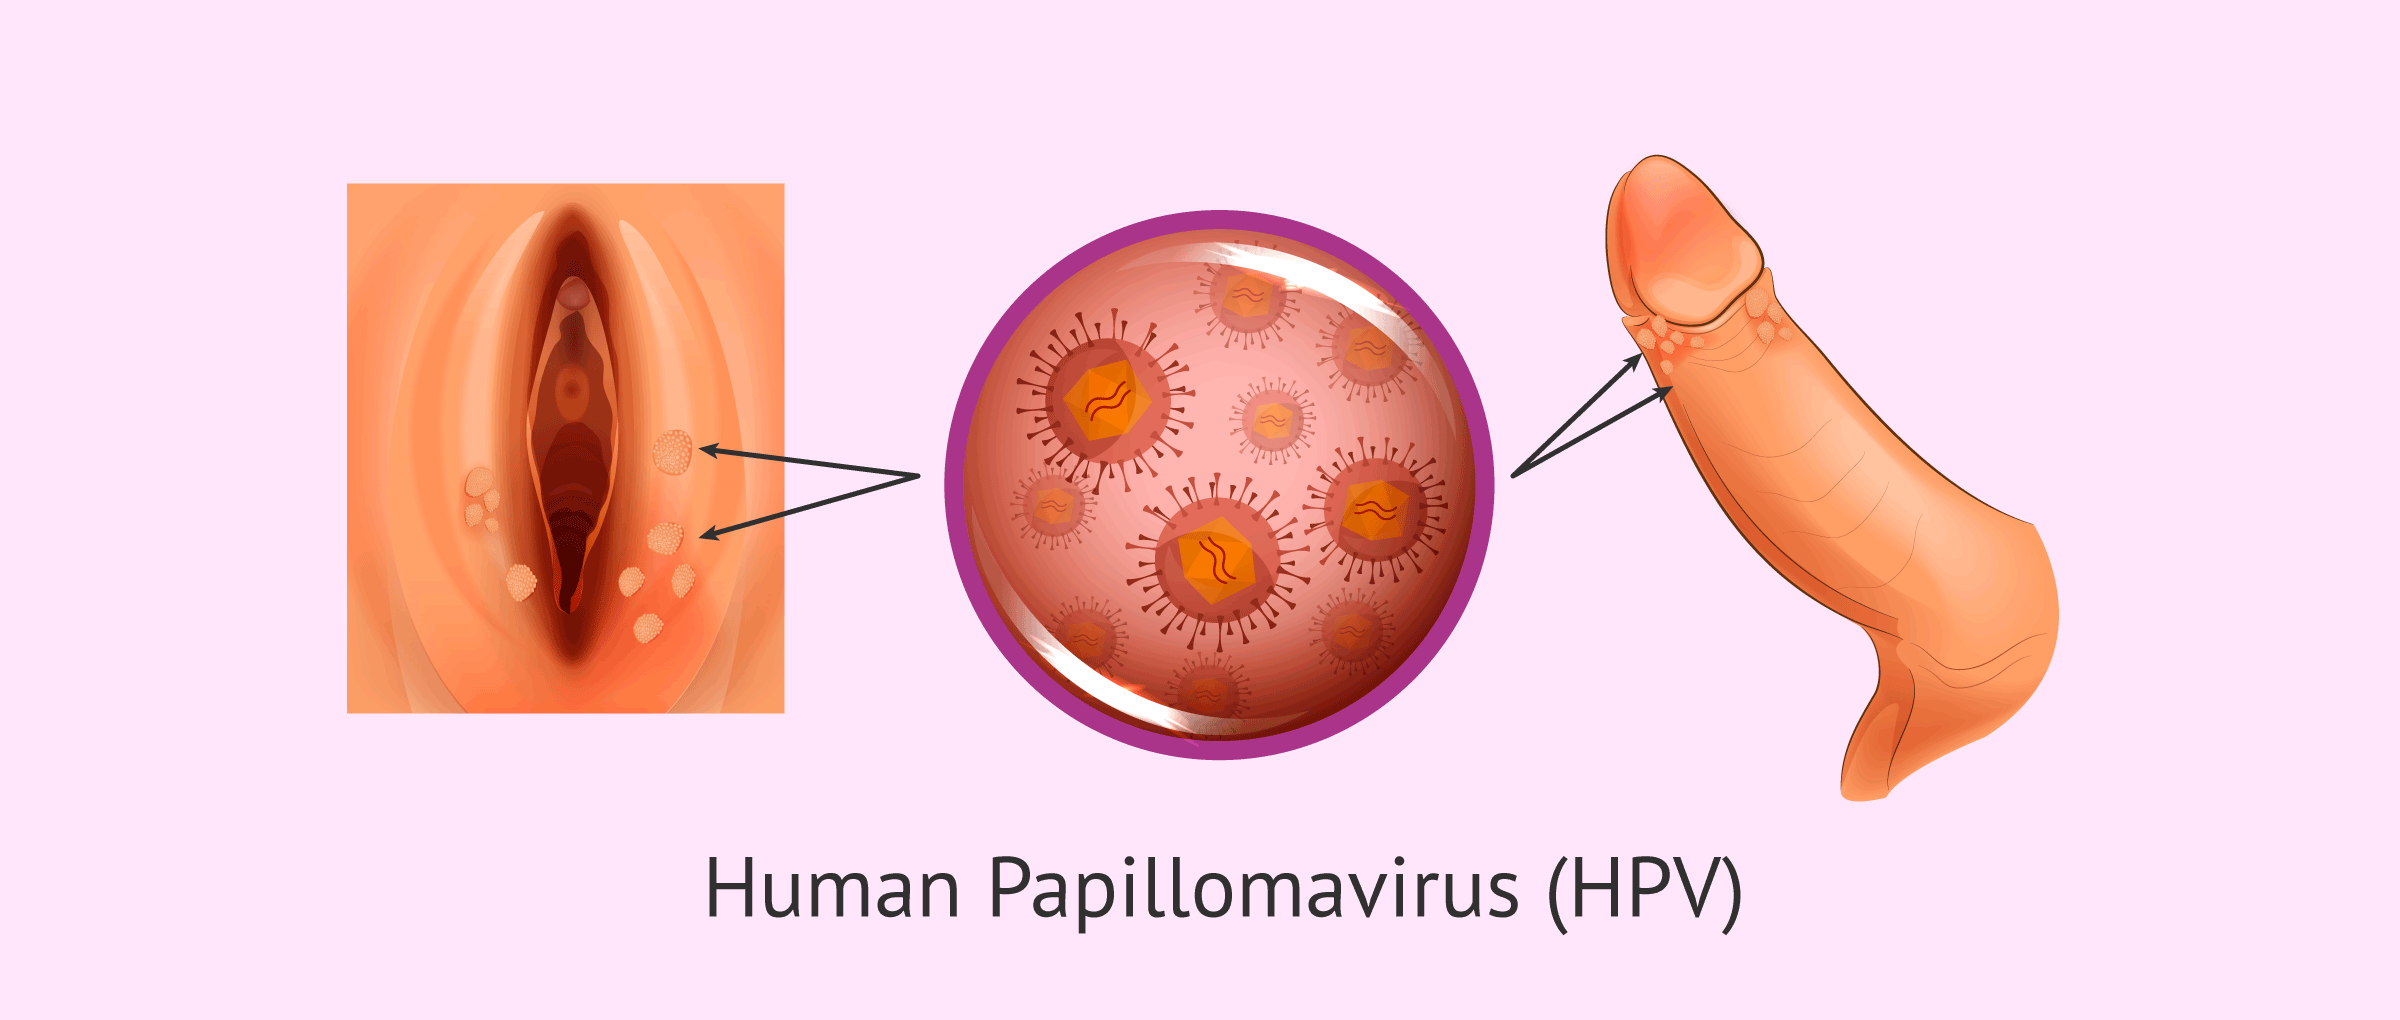 what is benign squamous papilloma human papillomavirus infection go away